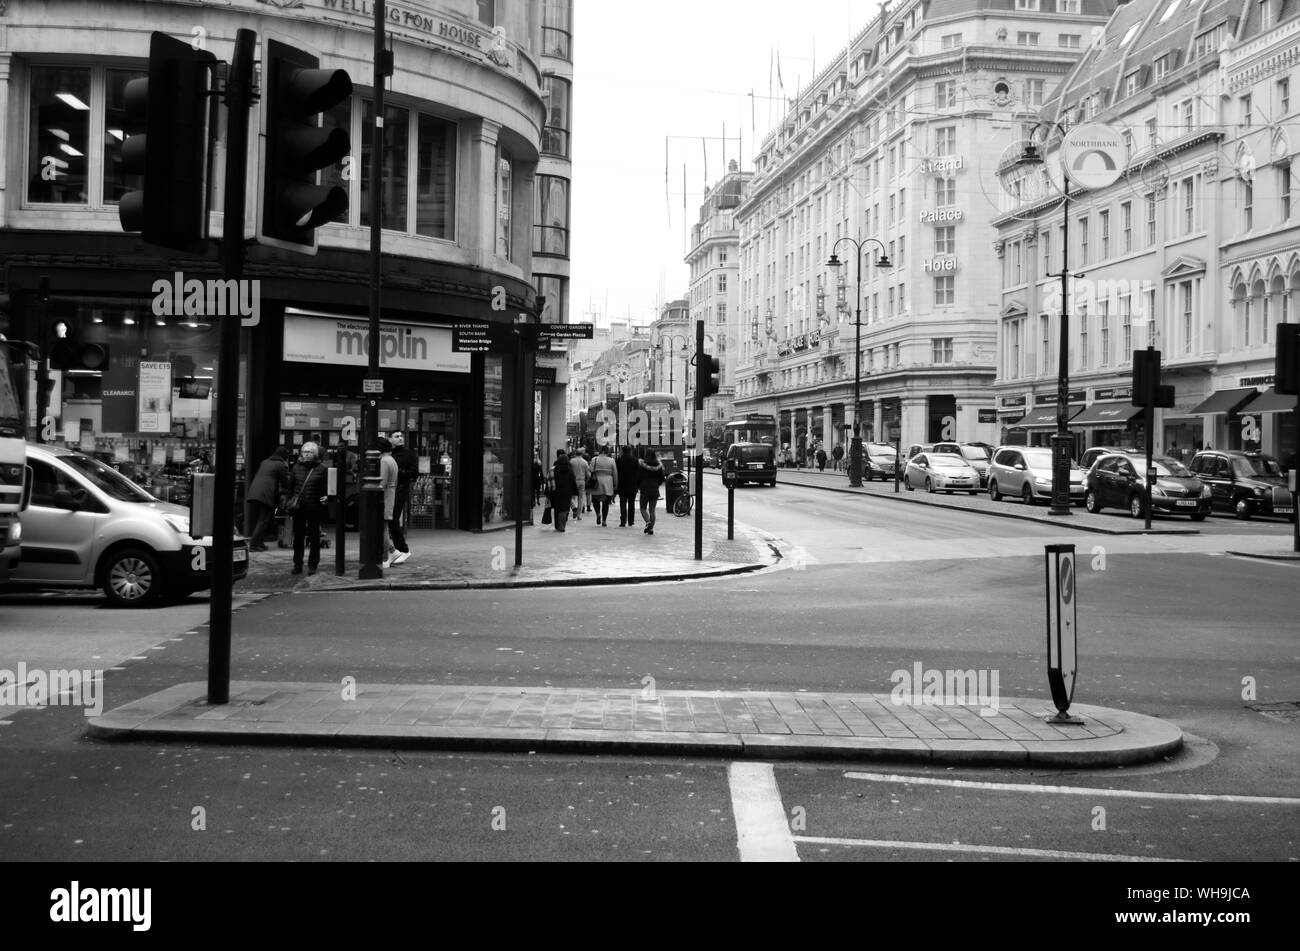 Street scene on the Strand in London, England Stock Photo